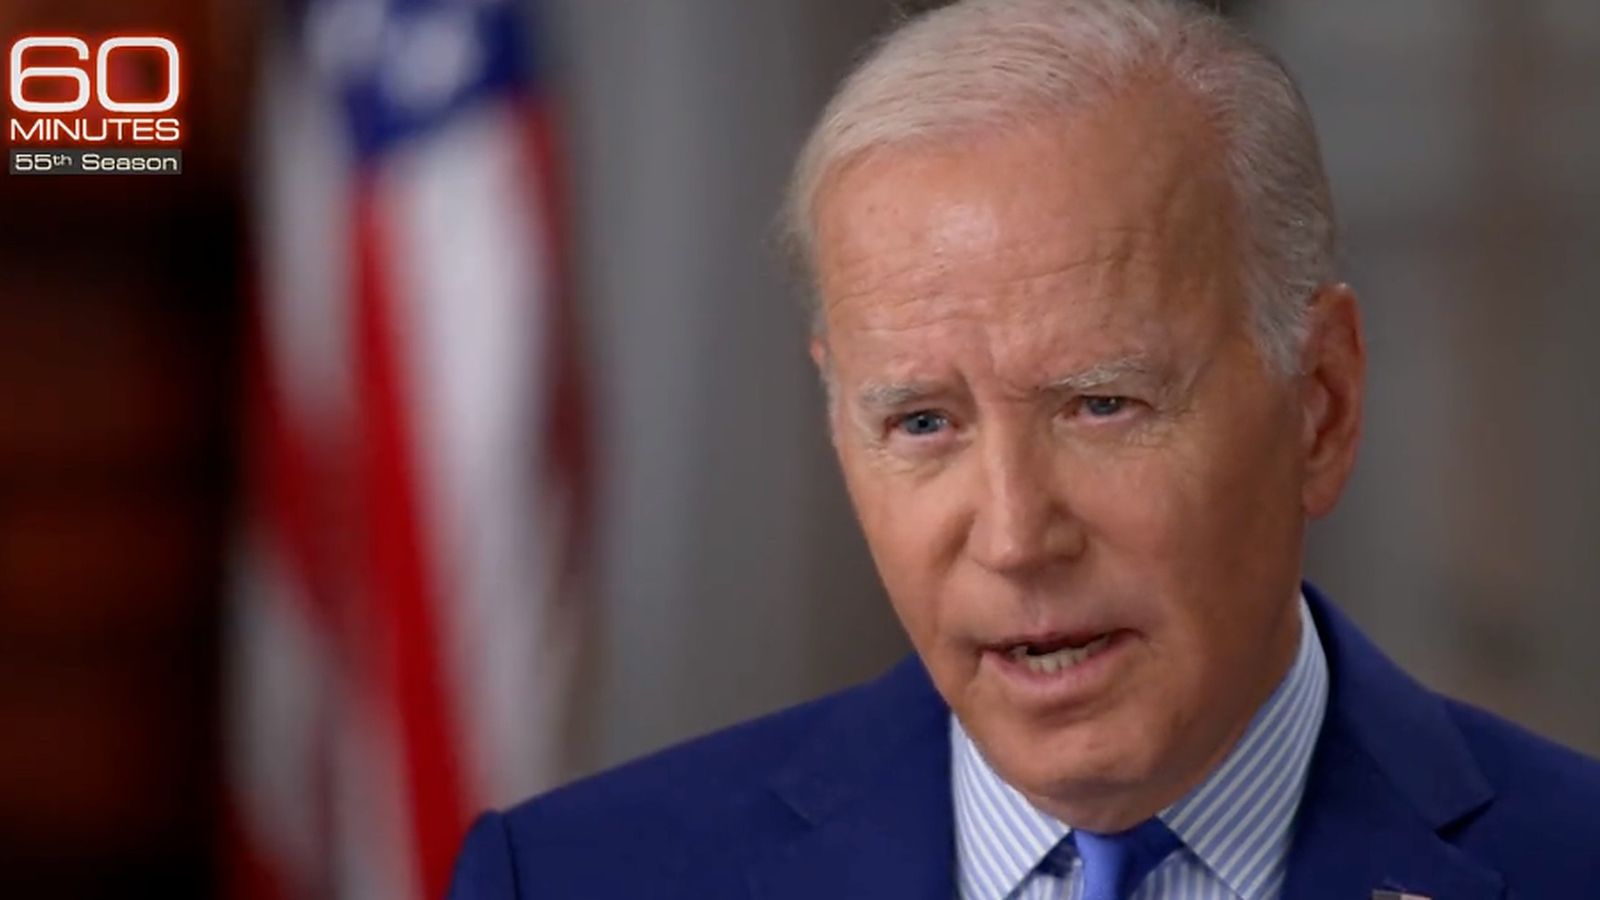 Biden on "60 Minutes" Key takeaways